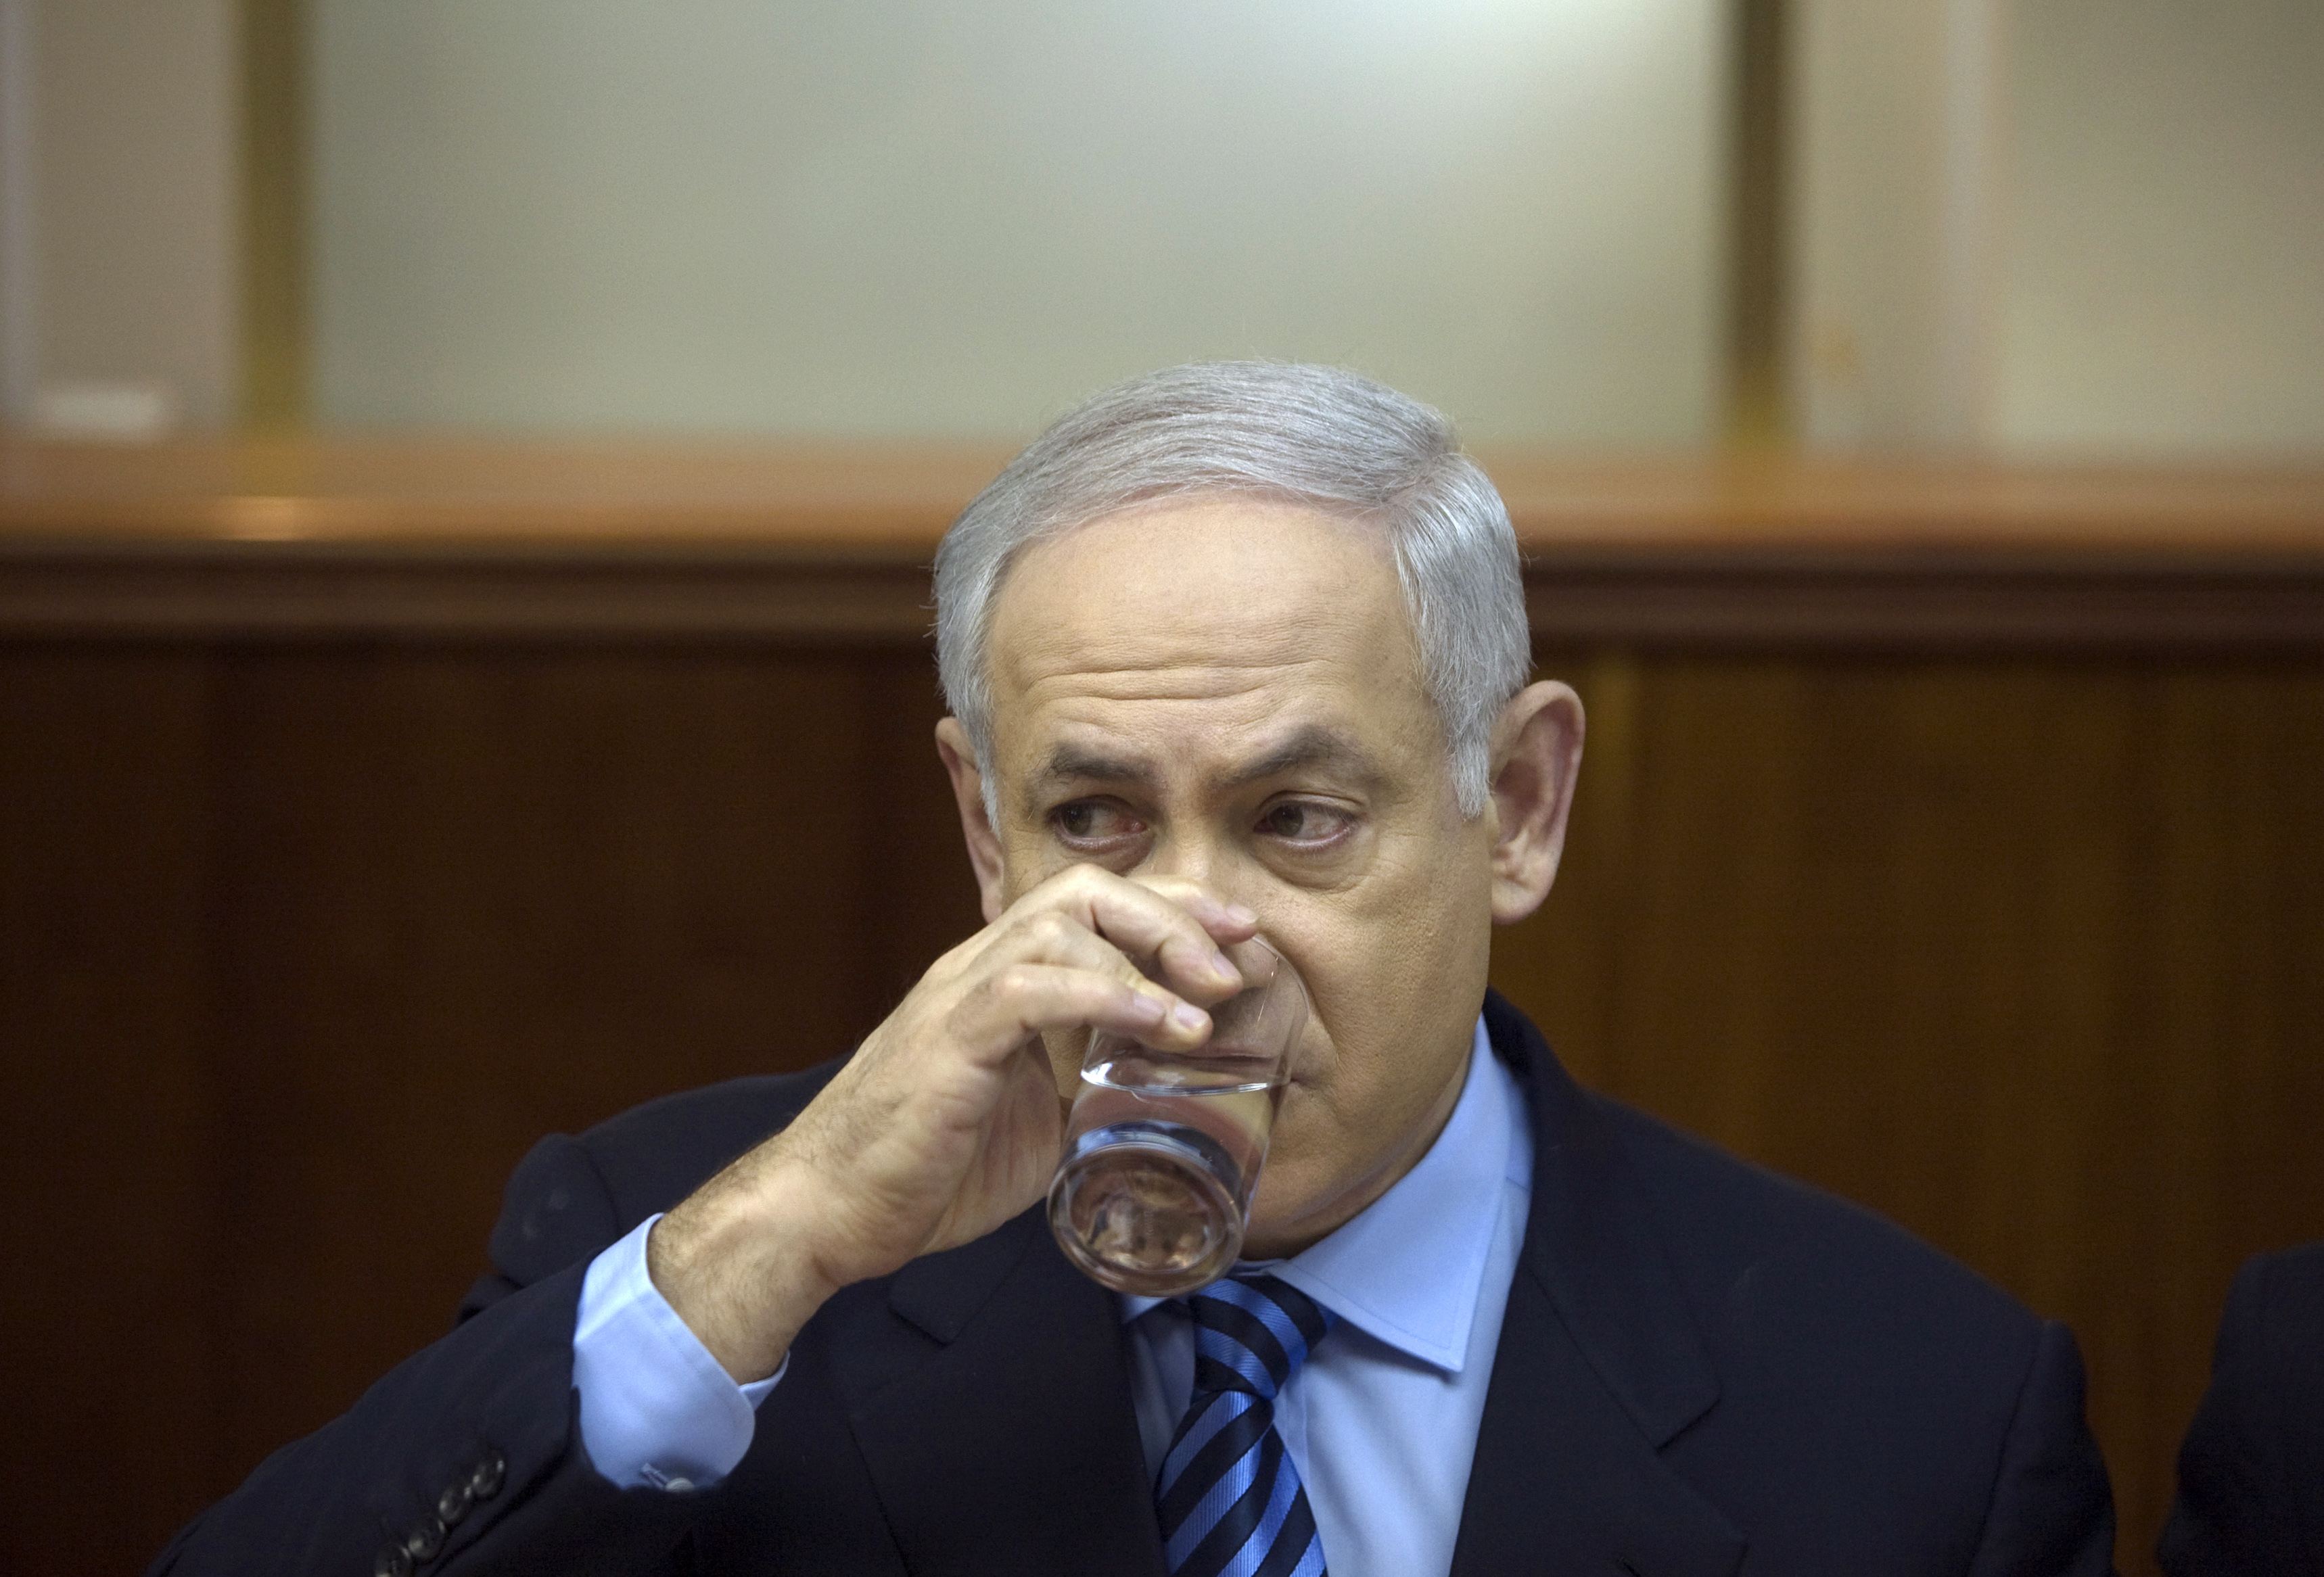 Israel's Prime Minister Benjamin Netanyahu drinks water during the weekly cabinet meeting in Jerusalem October 25, 2009. REUTERS/Baz Ratner (JERUSALEM POLITICS)